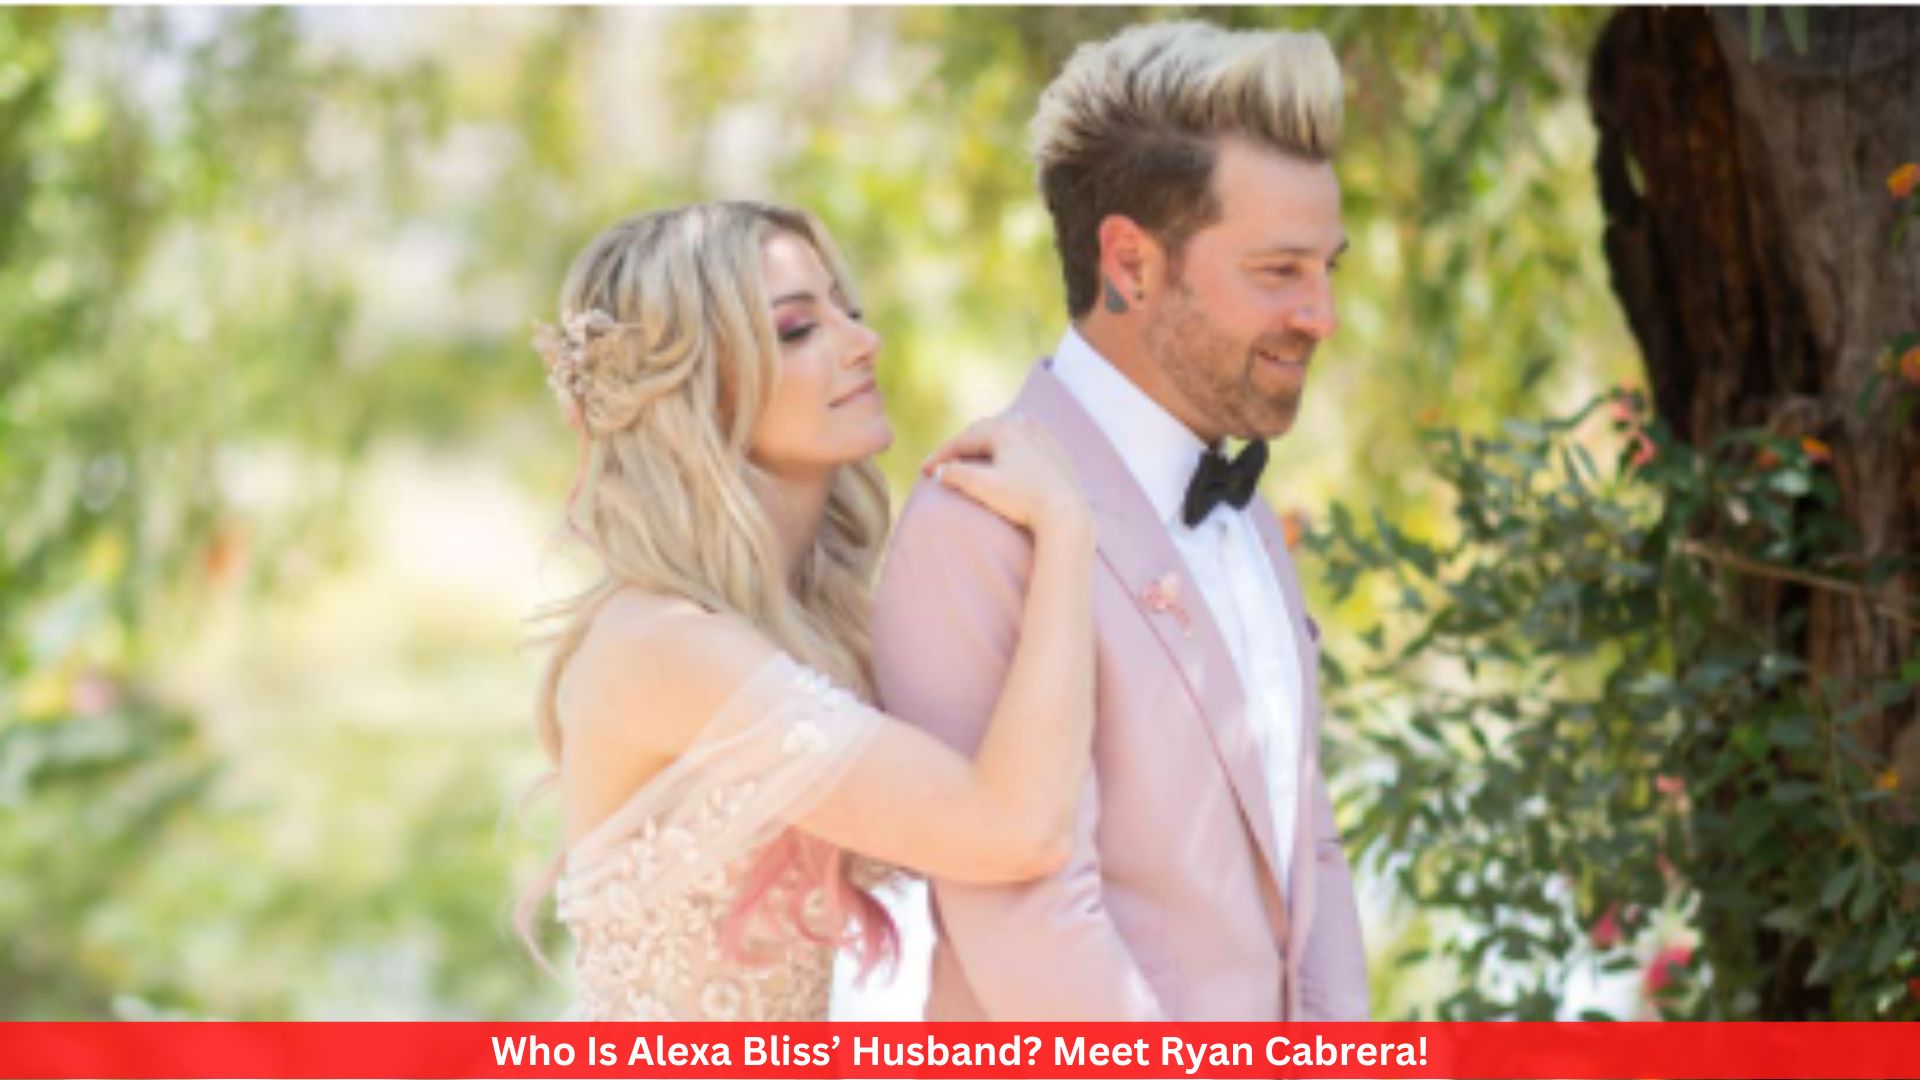 Who Is Alexa Bliss’ Husband? Meet Ryan Cabrera!